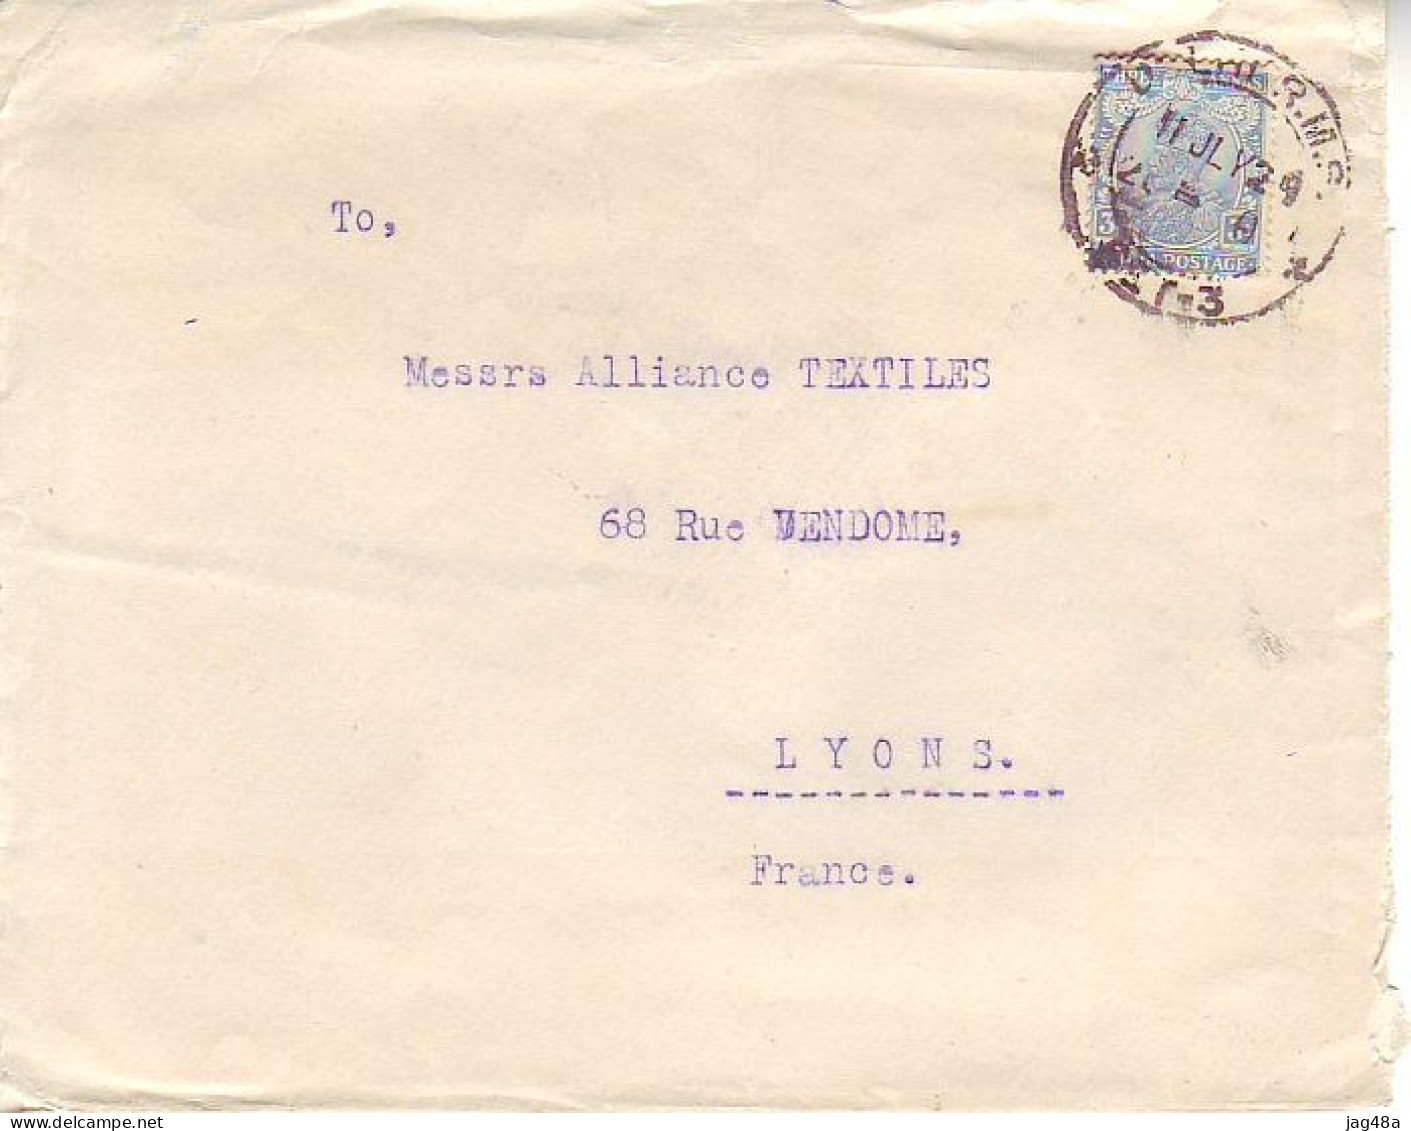 INDIA. 1924/Dheli, Indian-Trading Envelope/R.M.S. - International Freight Forwarding. - 1911-35 King George V